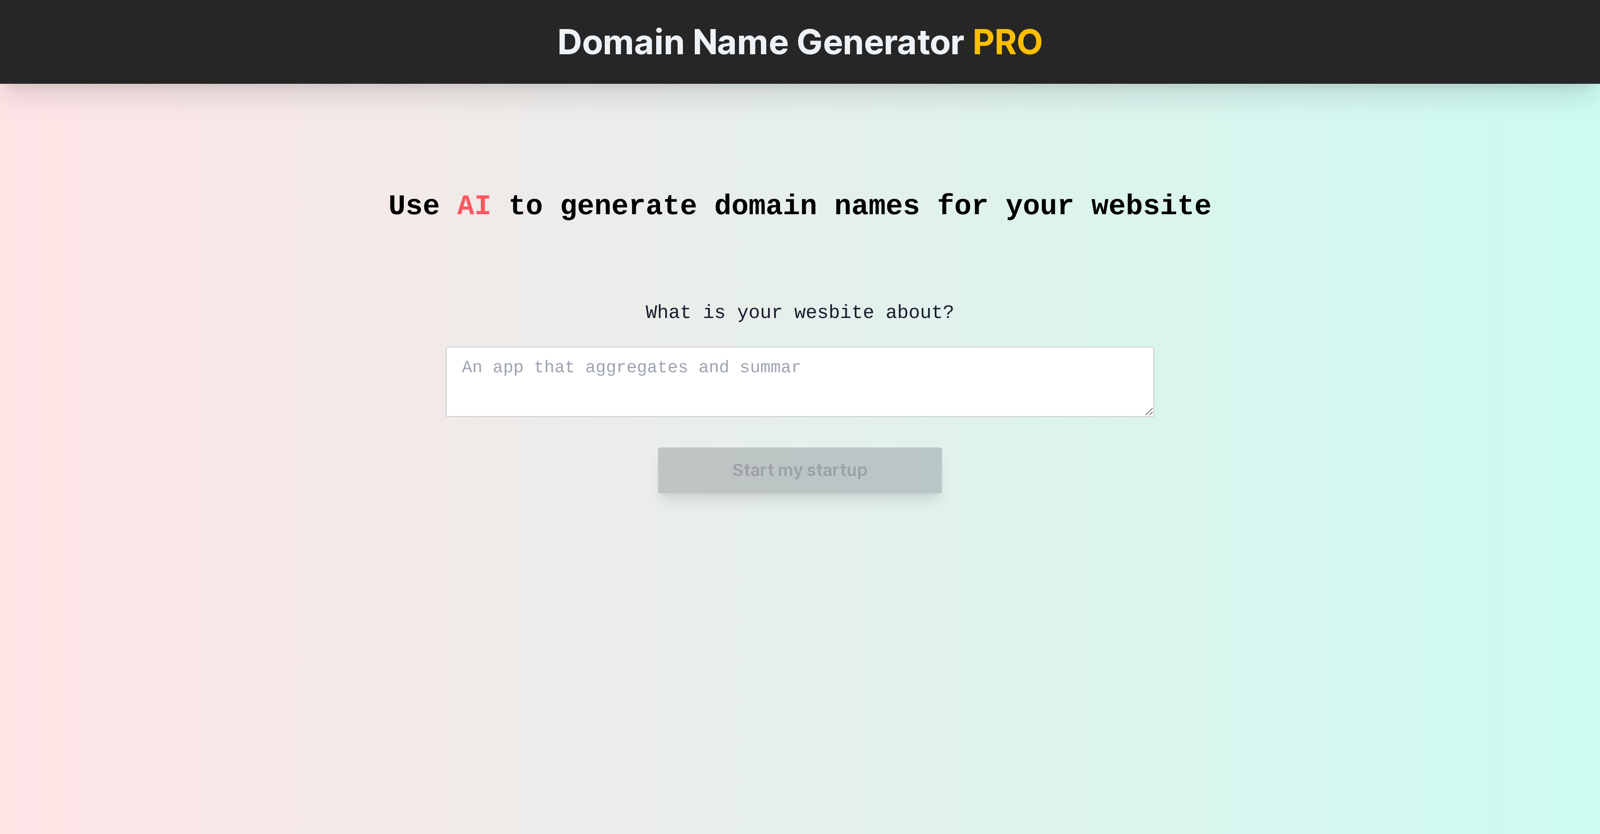 Domain Name Generator PRO website